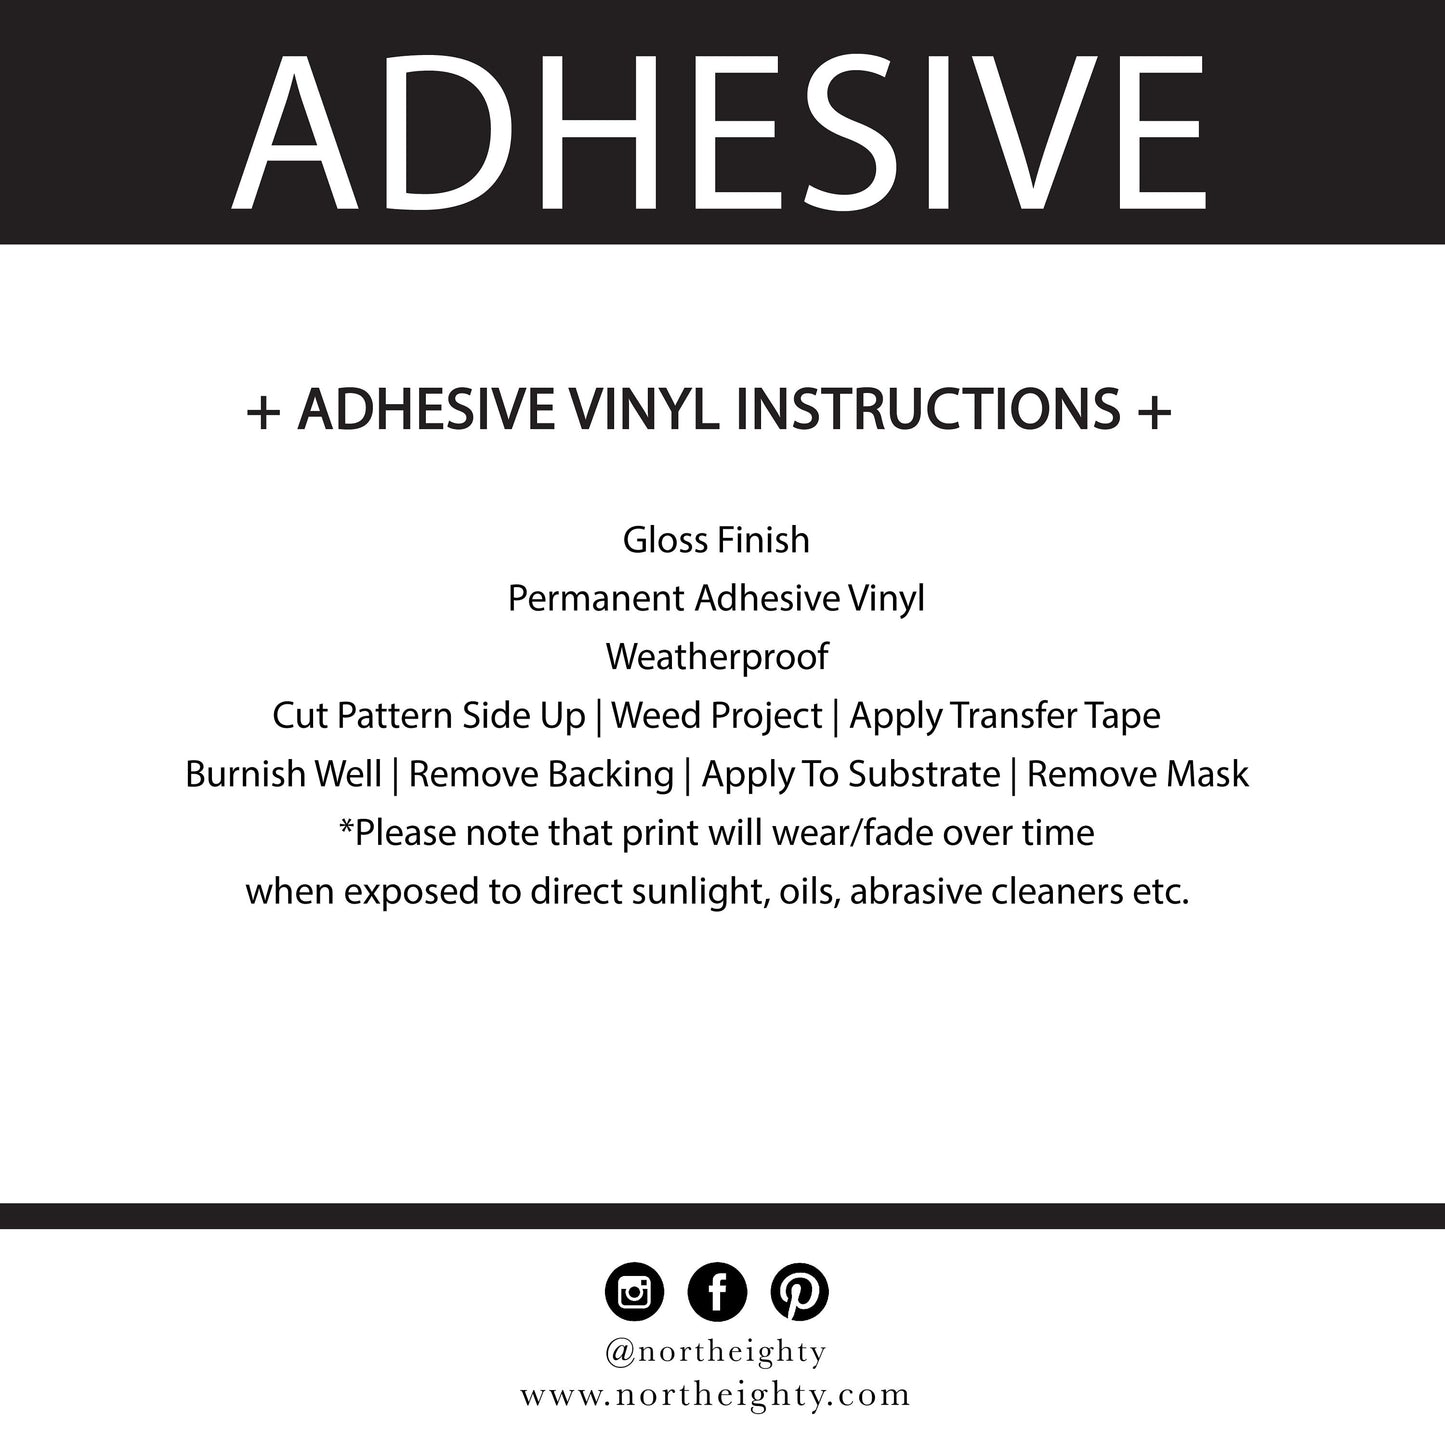 Argyle htv - Valentine Plaid Vinyl - Heat Transfer Vinyl - Adhesive Craft Vinyl